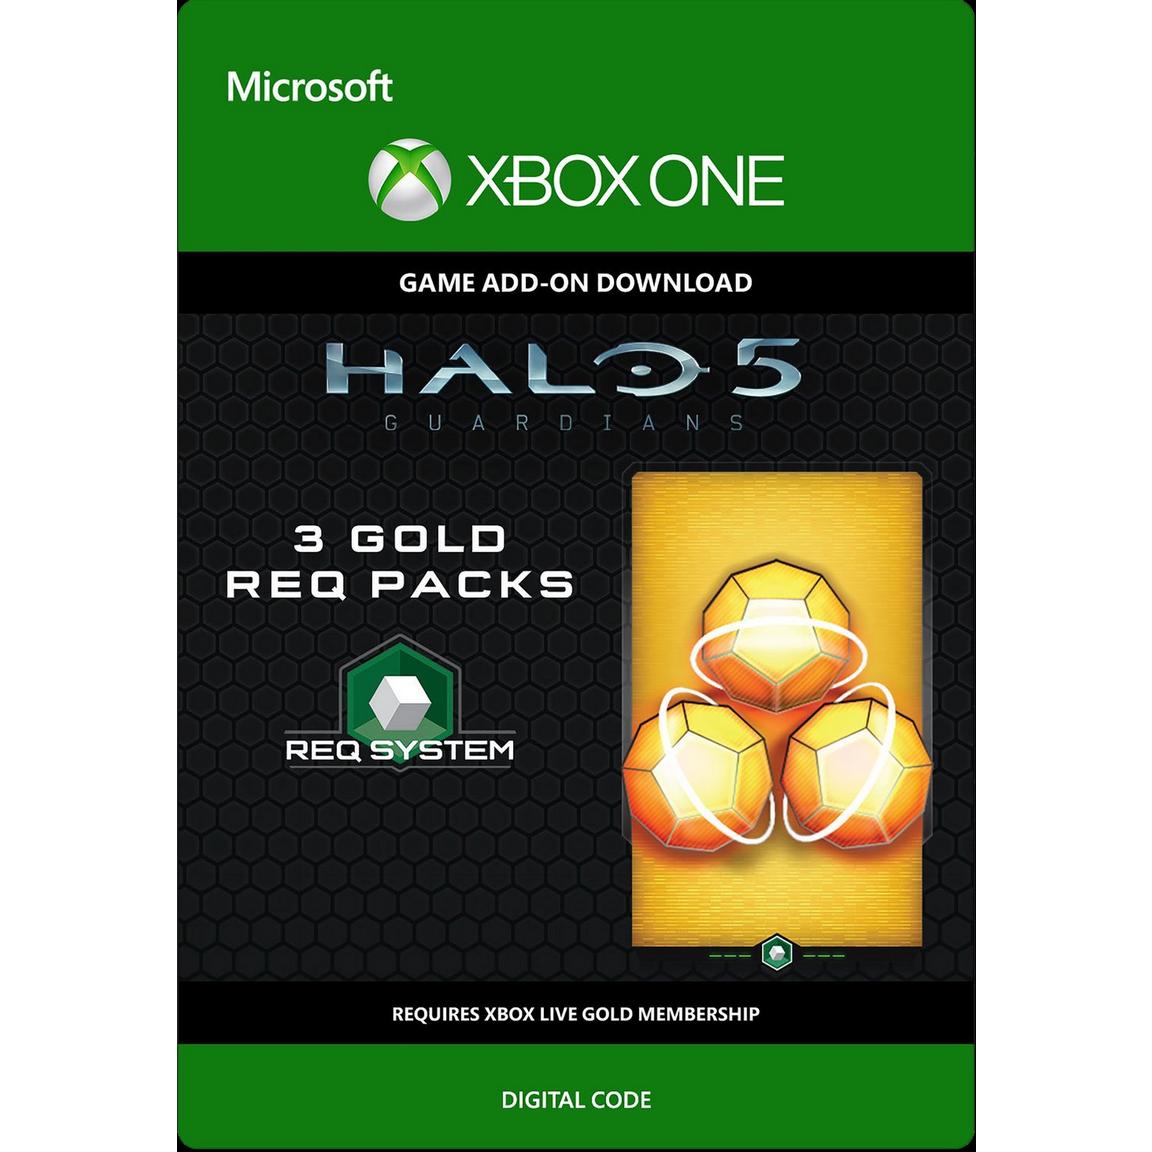 Microsoft Halo 5: Guardians 3 Gold Req Packs DLC - Xbox One -  7LM-00001